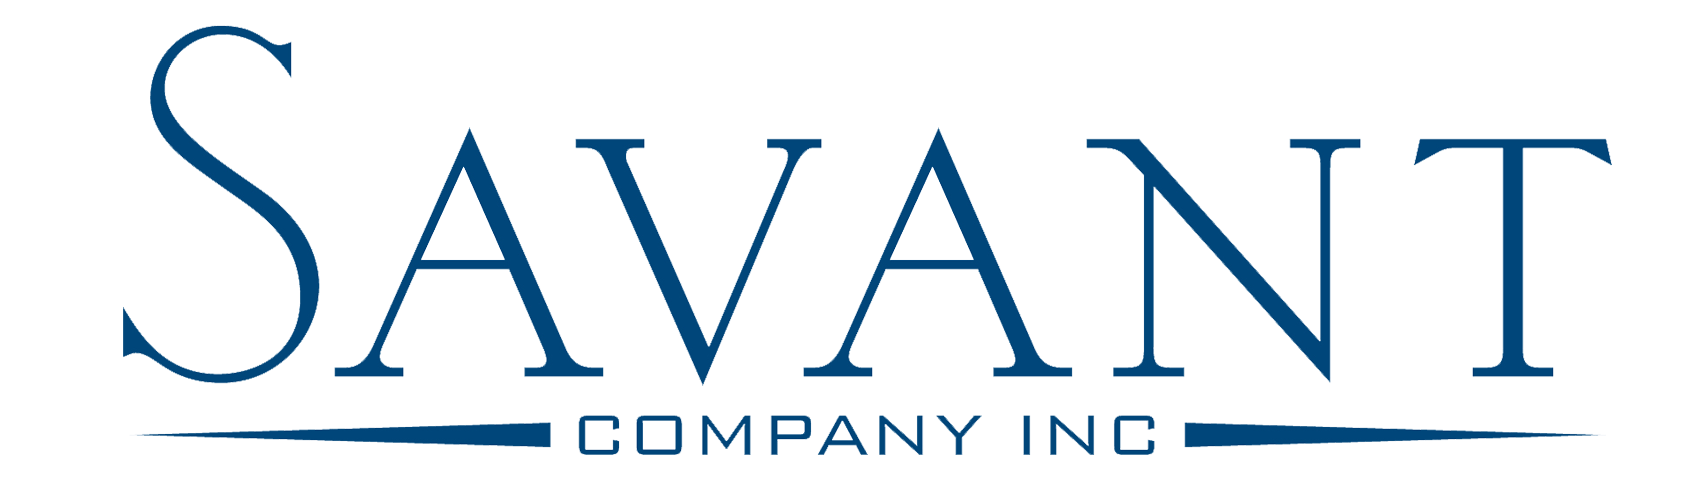 Savant Company Inc.